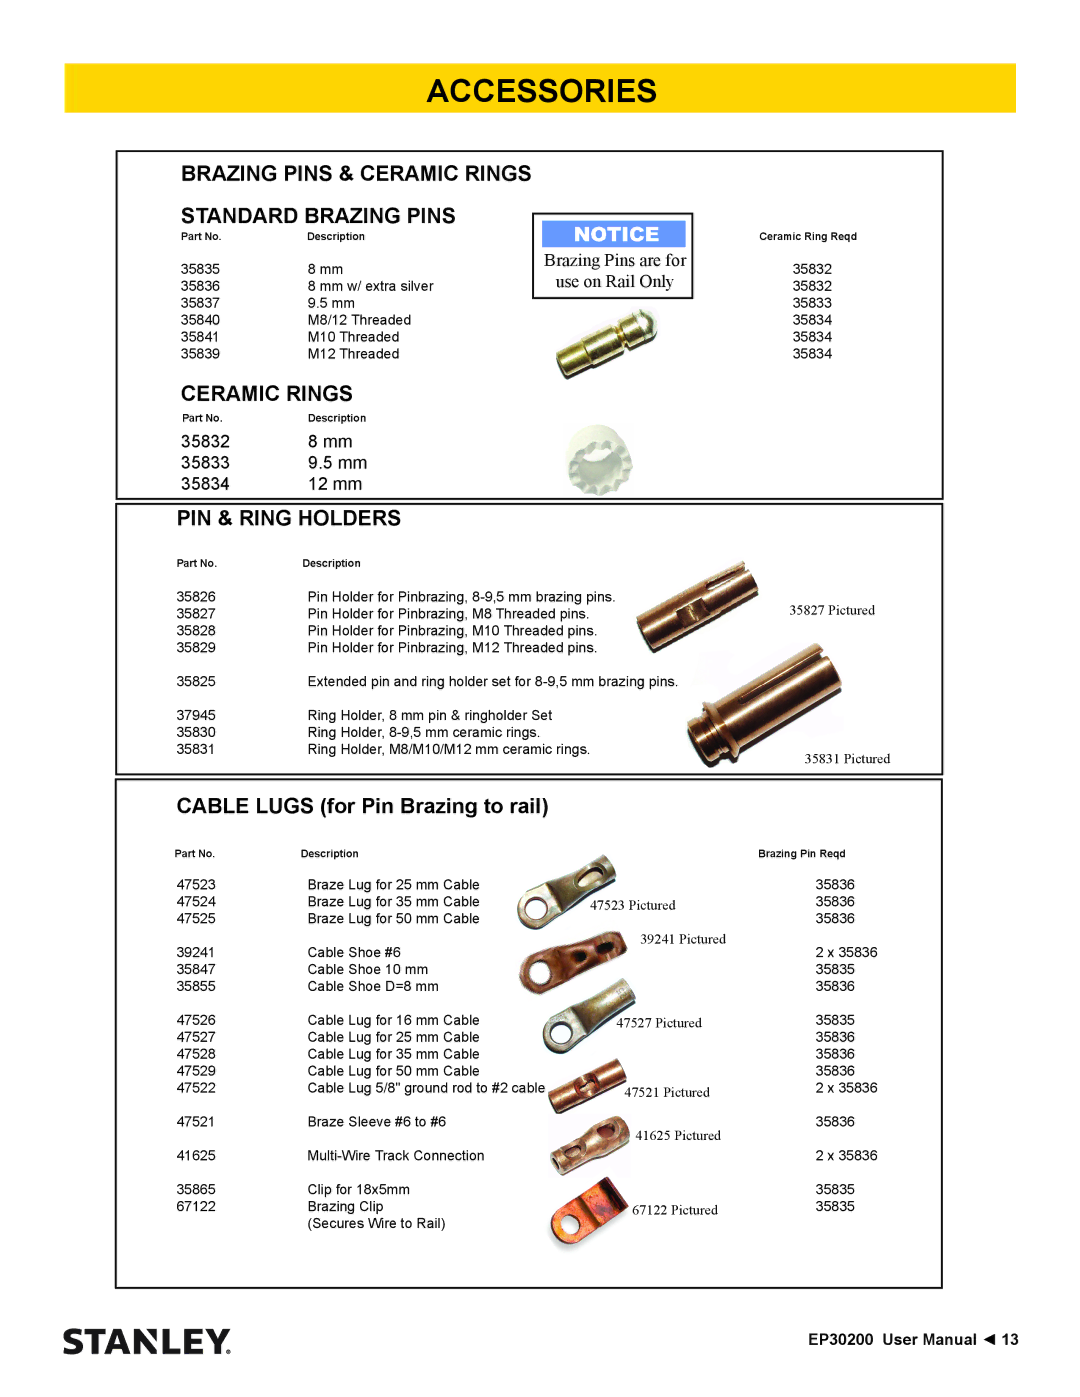 Stanley Black & Decker EP30200 user manual Brazing Pins & Ceramic Rings Standard Brazing Pins, PIN & Ring Holders 